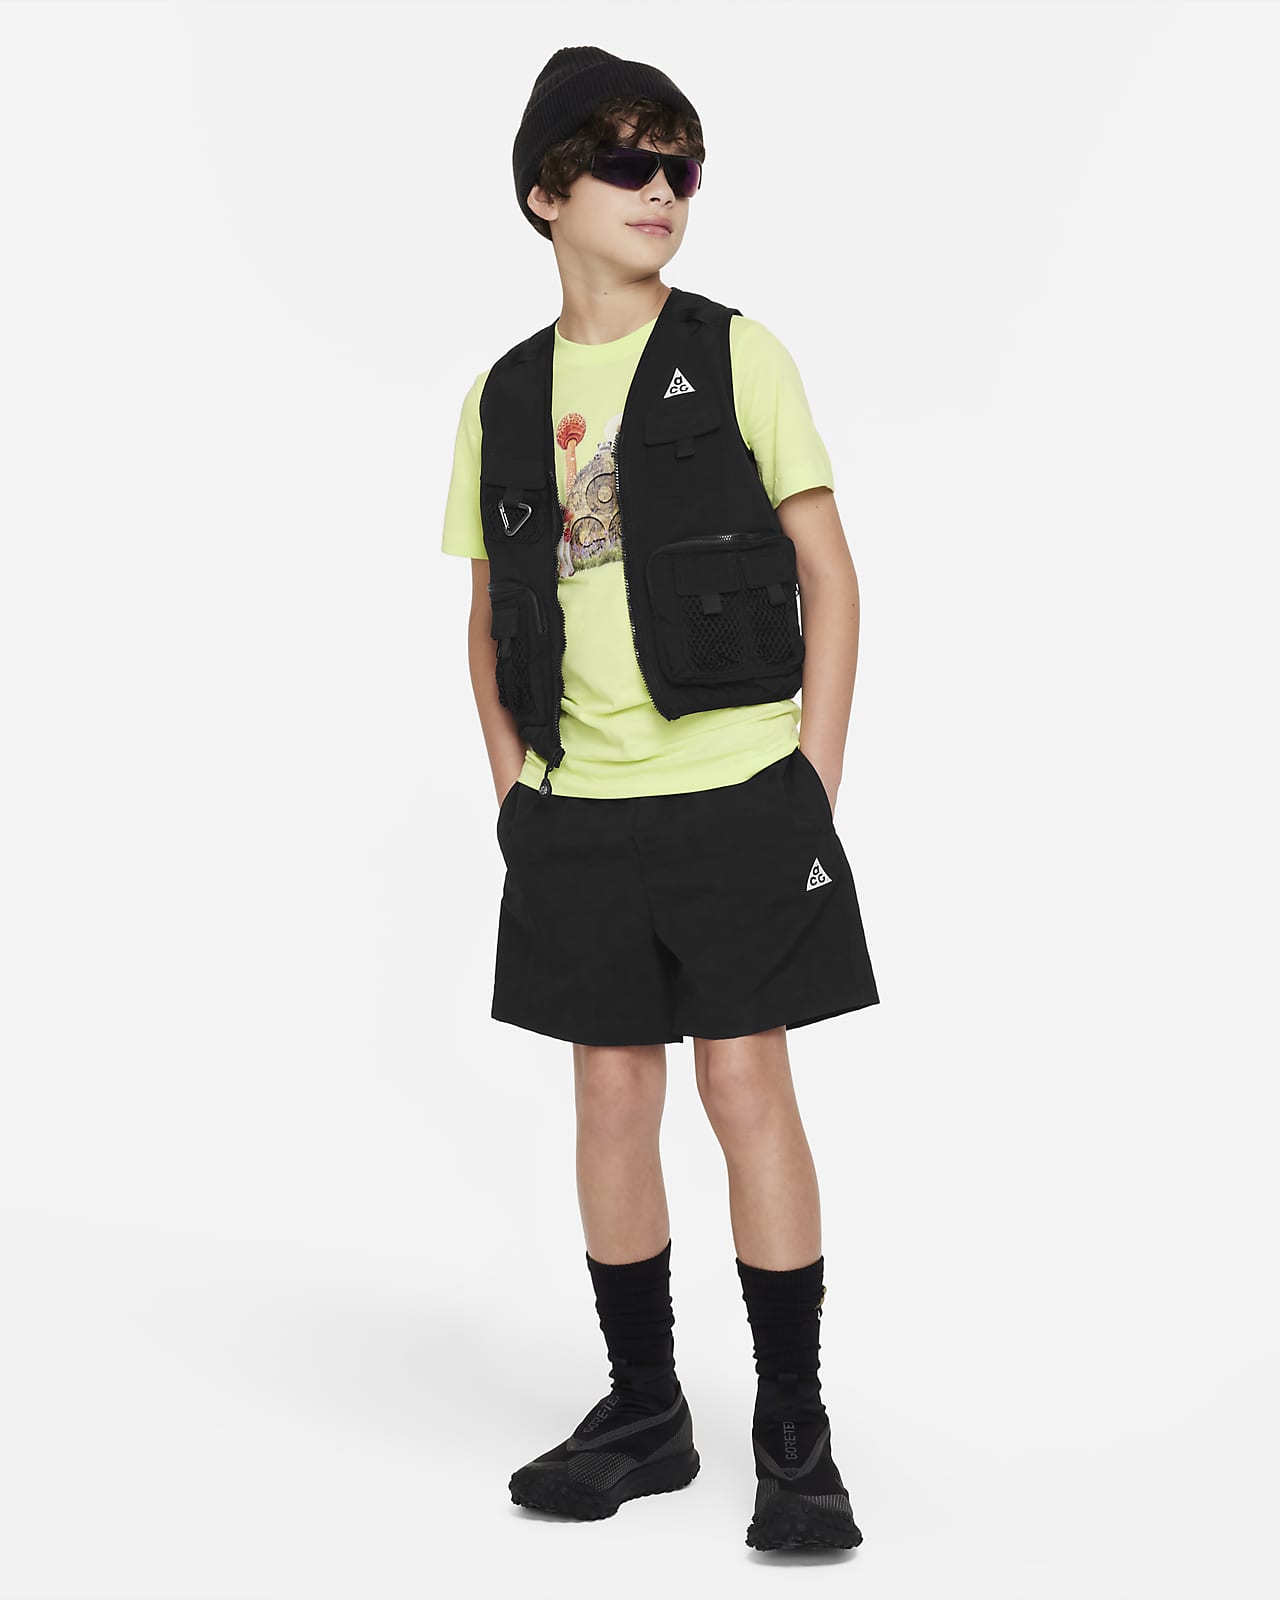 Nike Dri-Fit Acg Older Kids' T-Shirt. Nike Vn